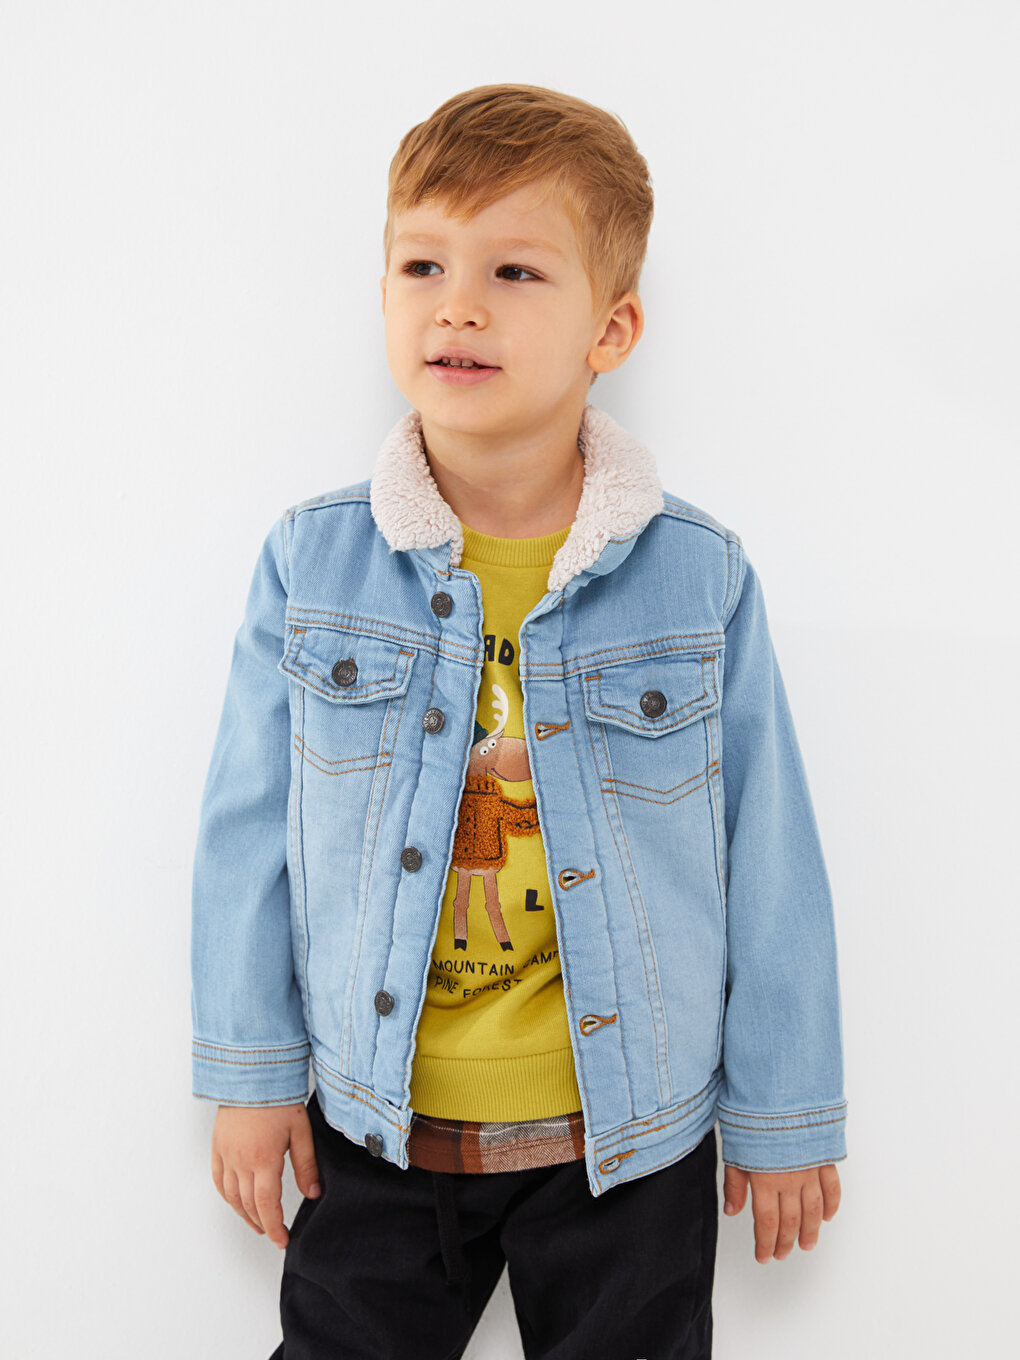 Tommy Hilfiger Jean jacket for boy Size M/12-14 New | eBay-atpcosmetics.com.vn